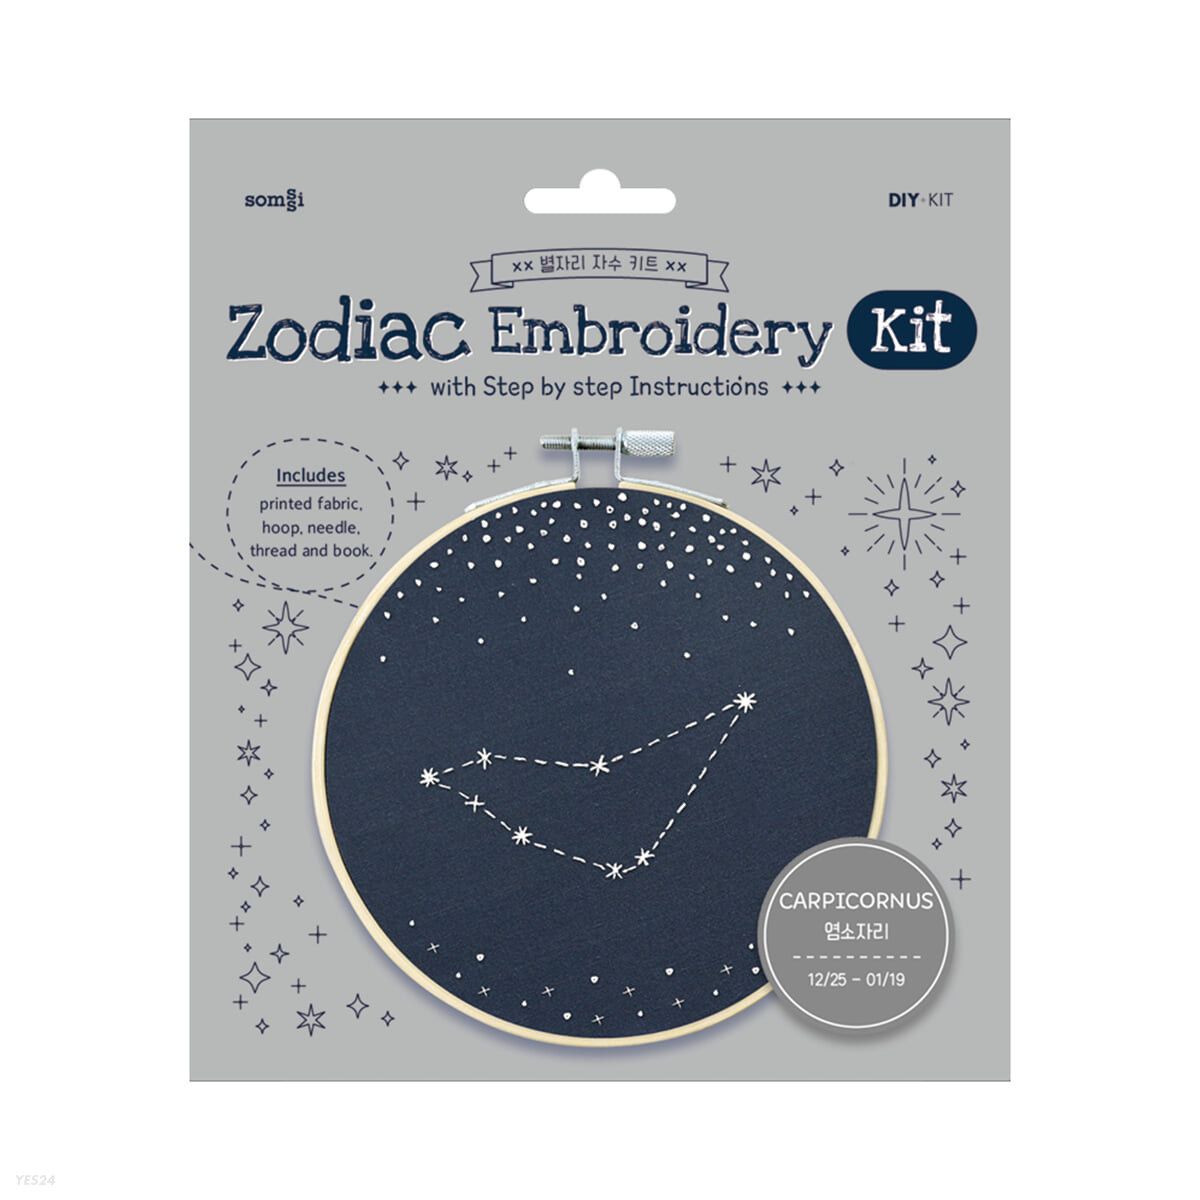 Zodiac Embroidery Kit - Carpicornus